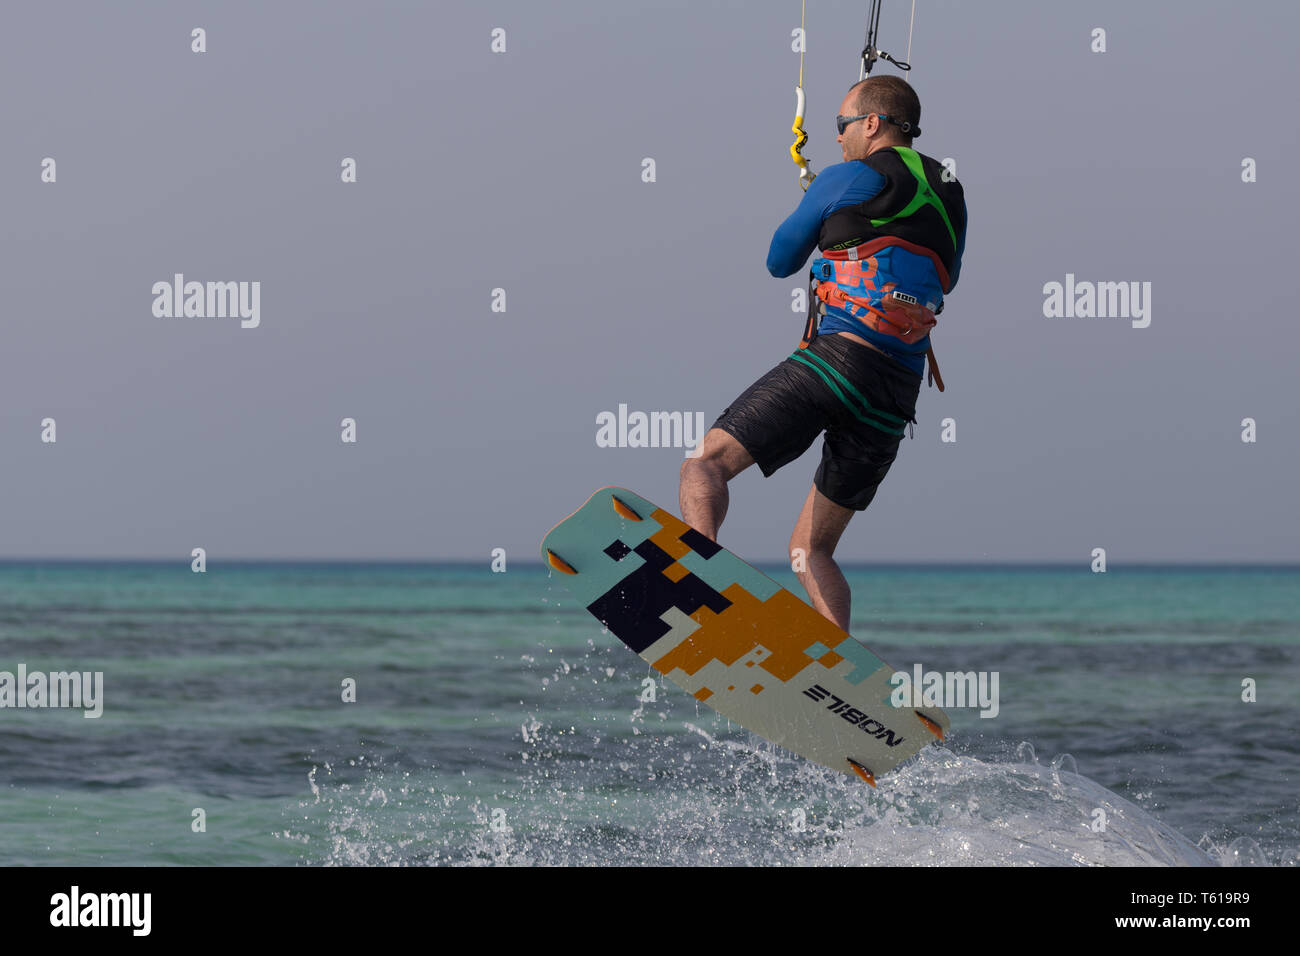 Kiteboarder jumping Stock Photo